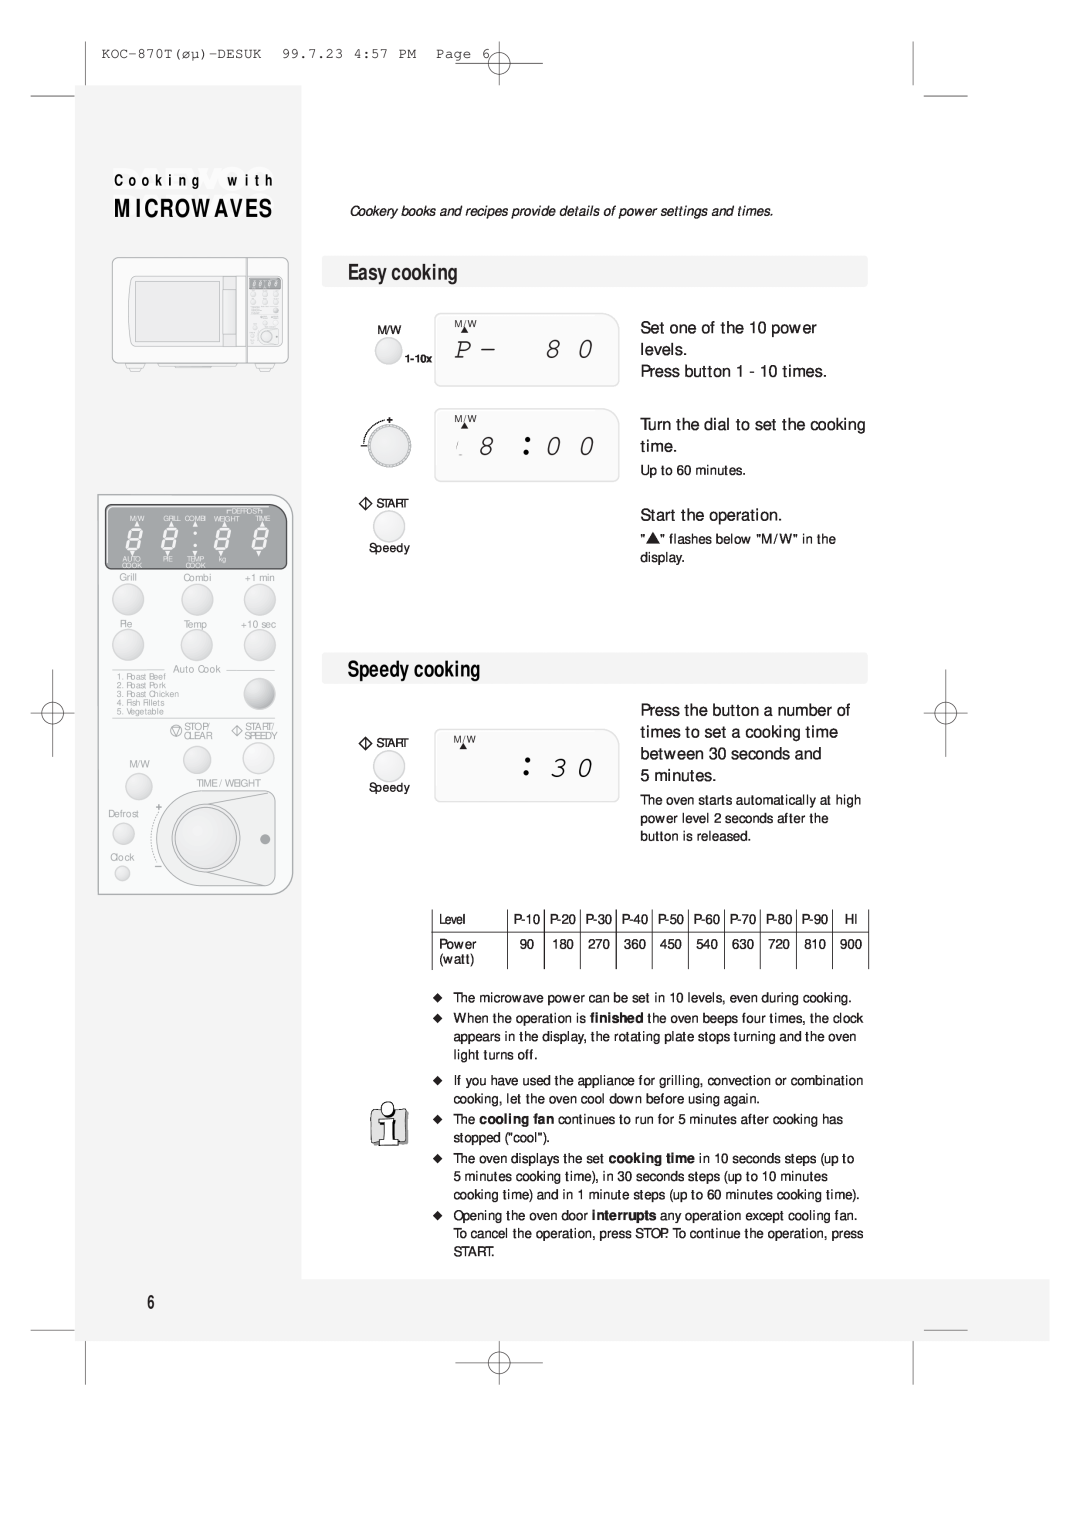 Daewoo KOC-870T instruction manual Micro Waves, Easy cooking, Speedy cooking, C o o k i n g 